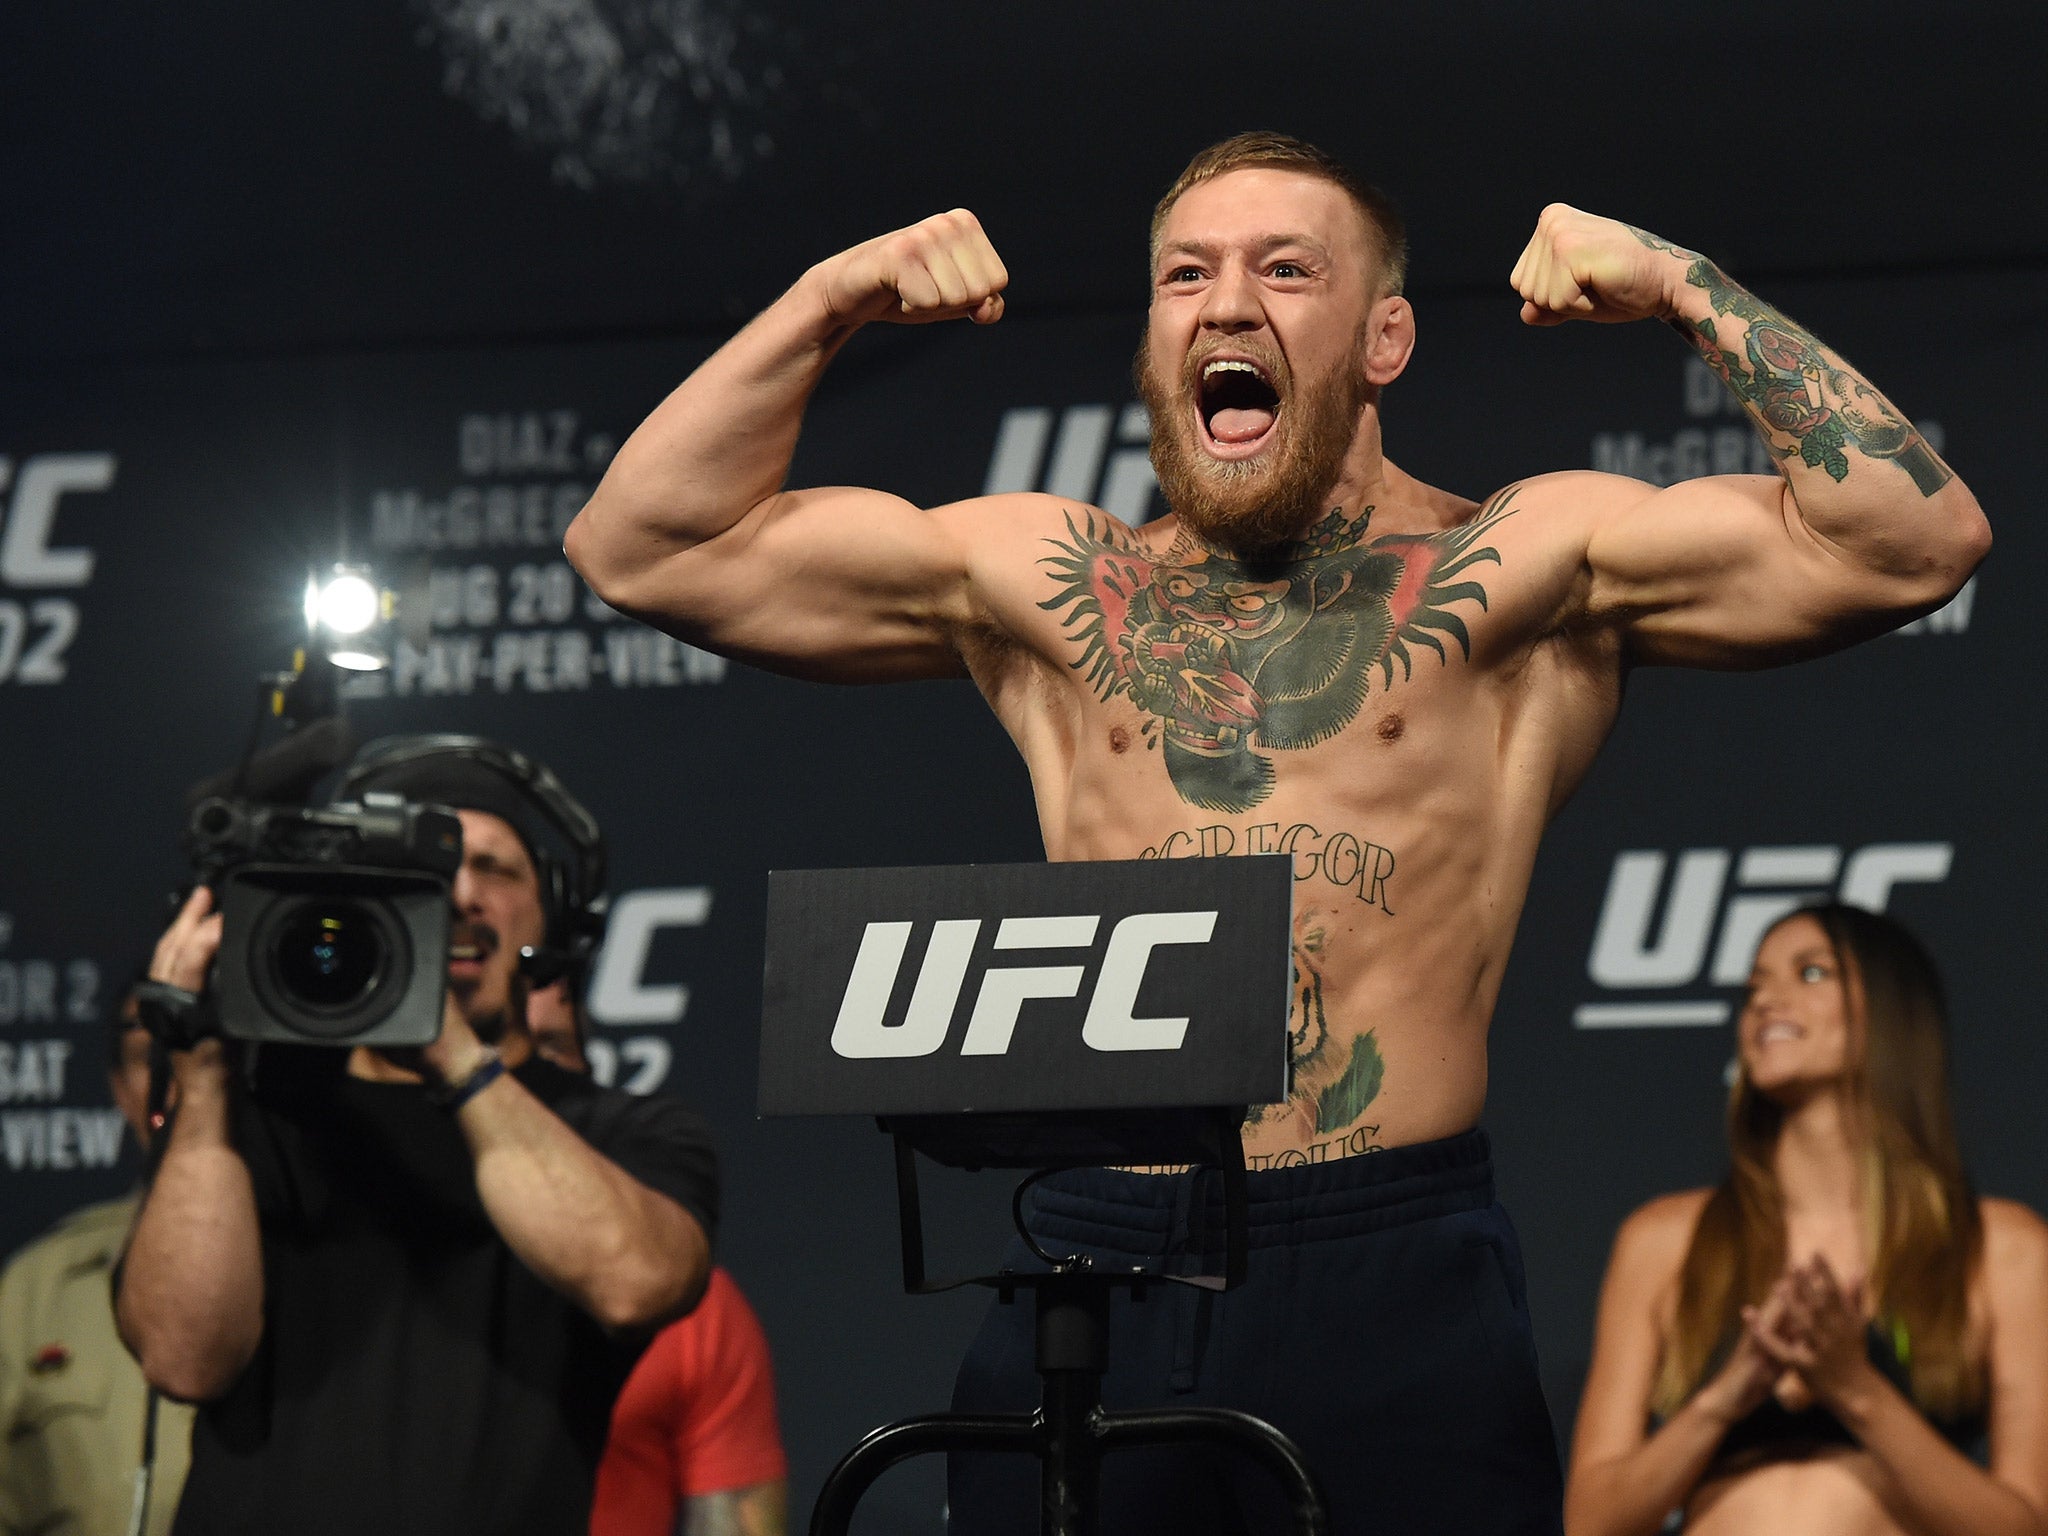 UFC 202 live: Conor McGregor defeats Nate Diaz in epic fight to set up trilogy decider ...